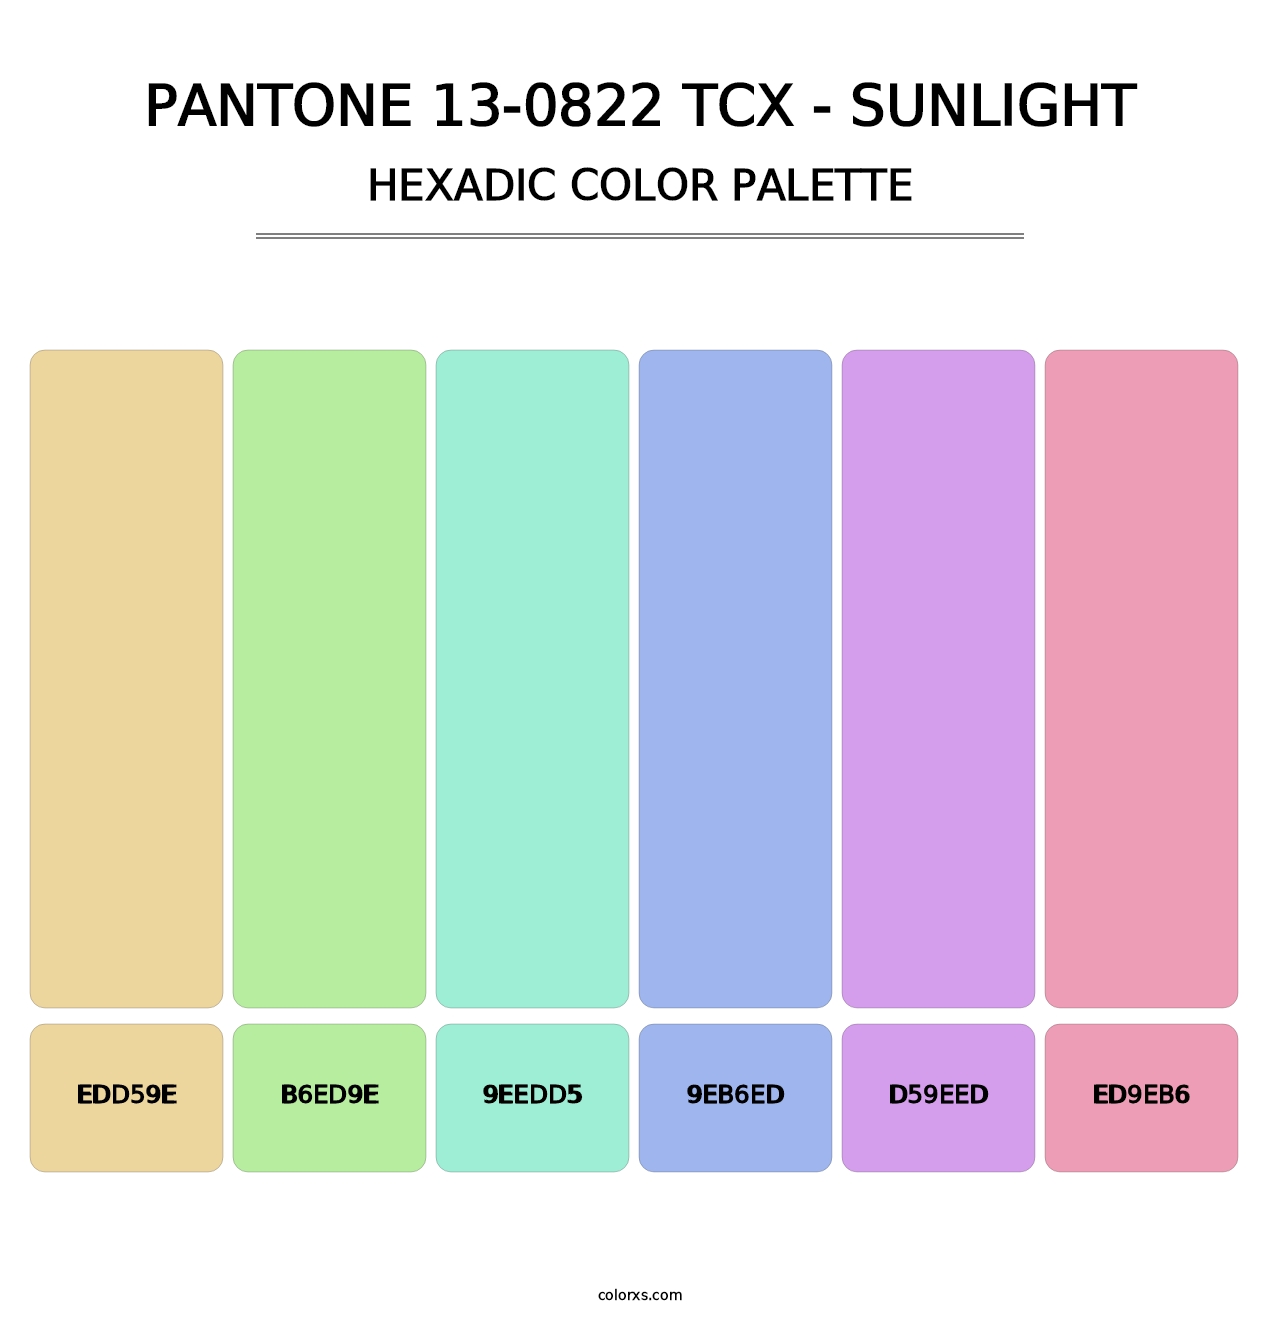 PANTONE 13-0822 TCX - Sunlight - Hexadic Color Palette